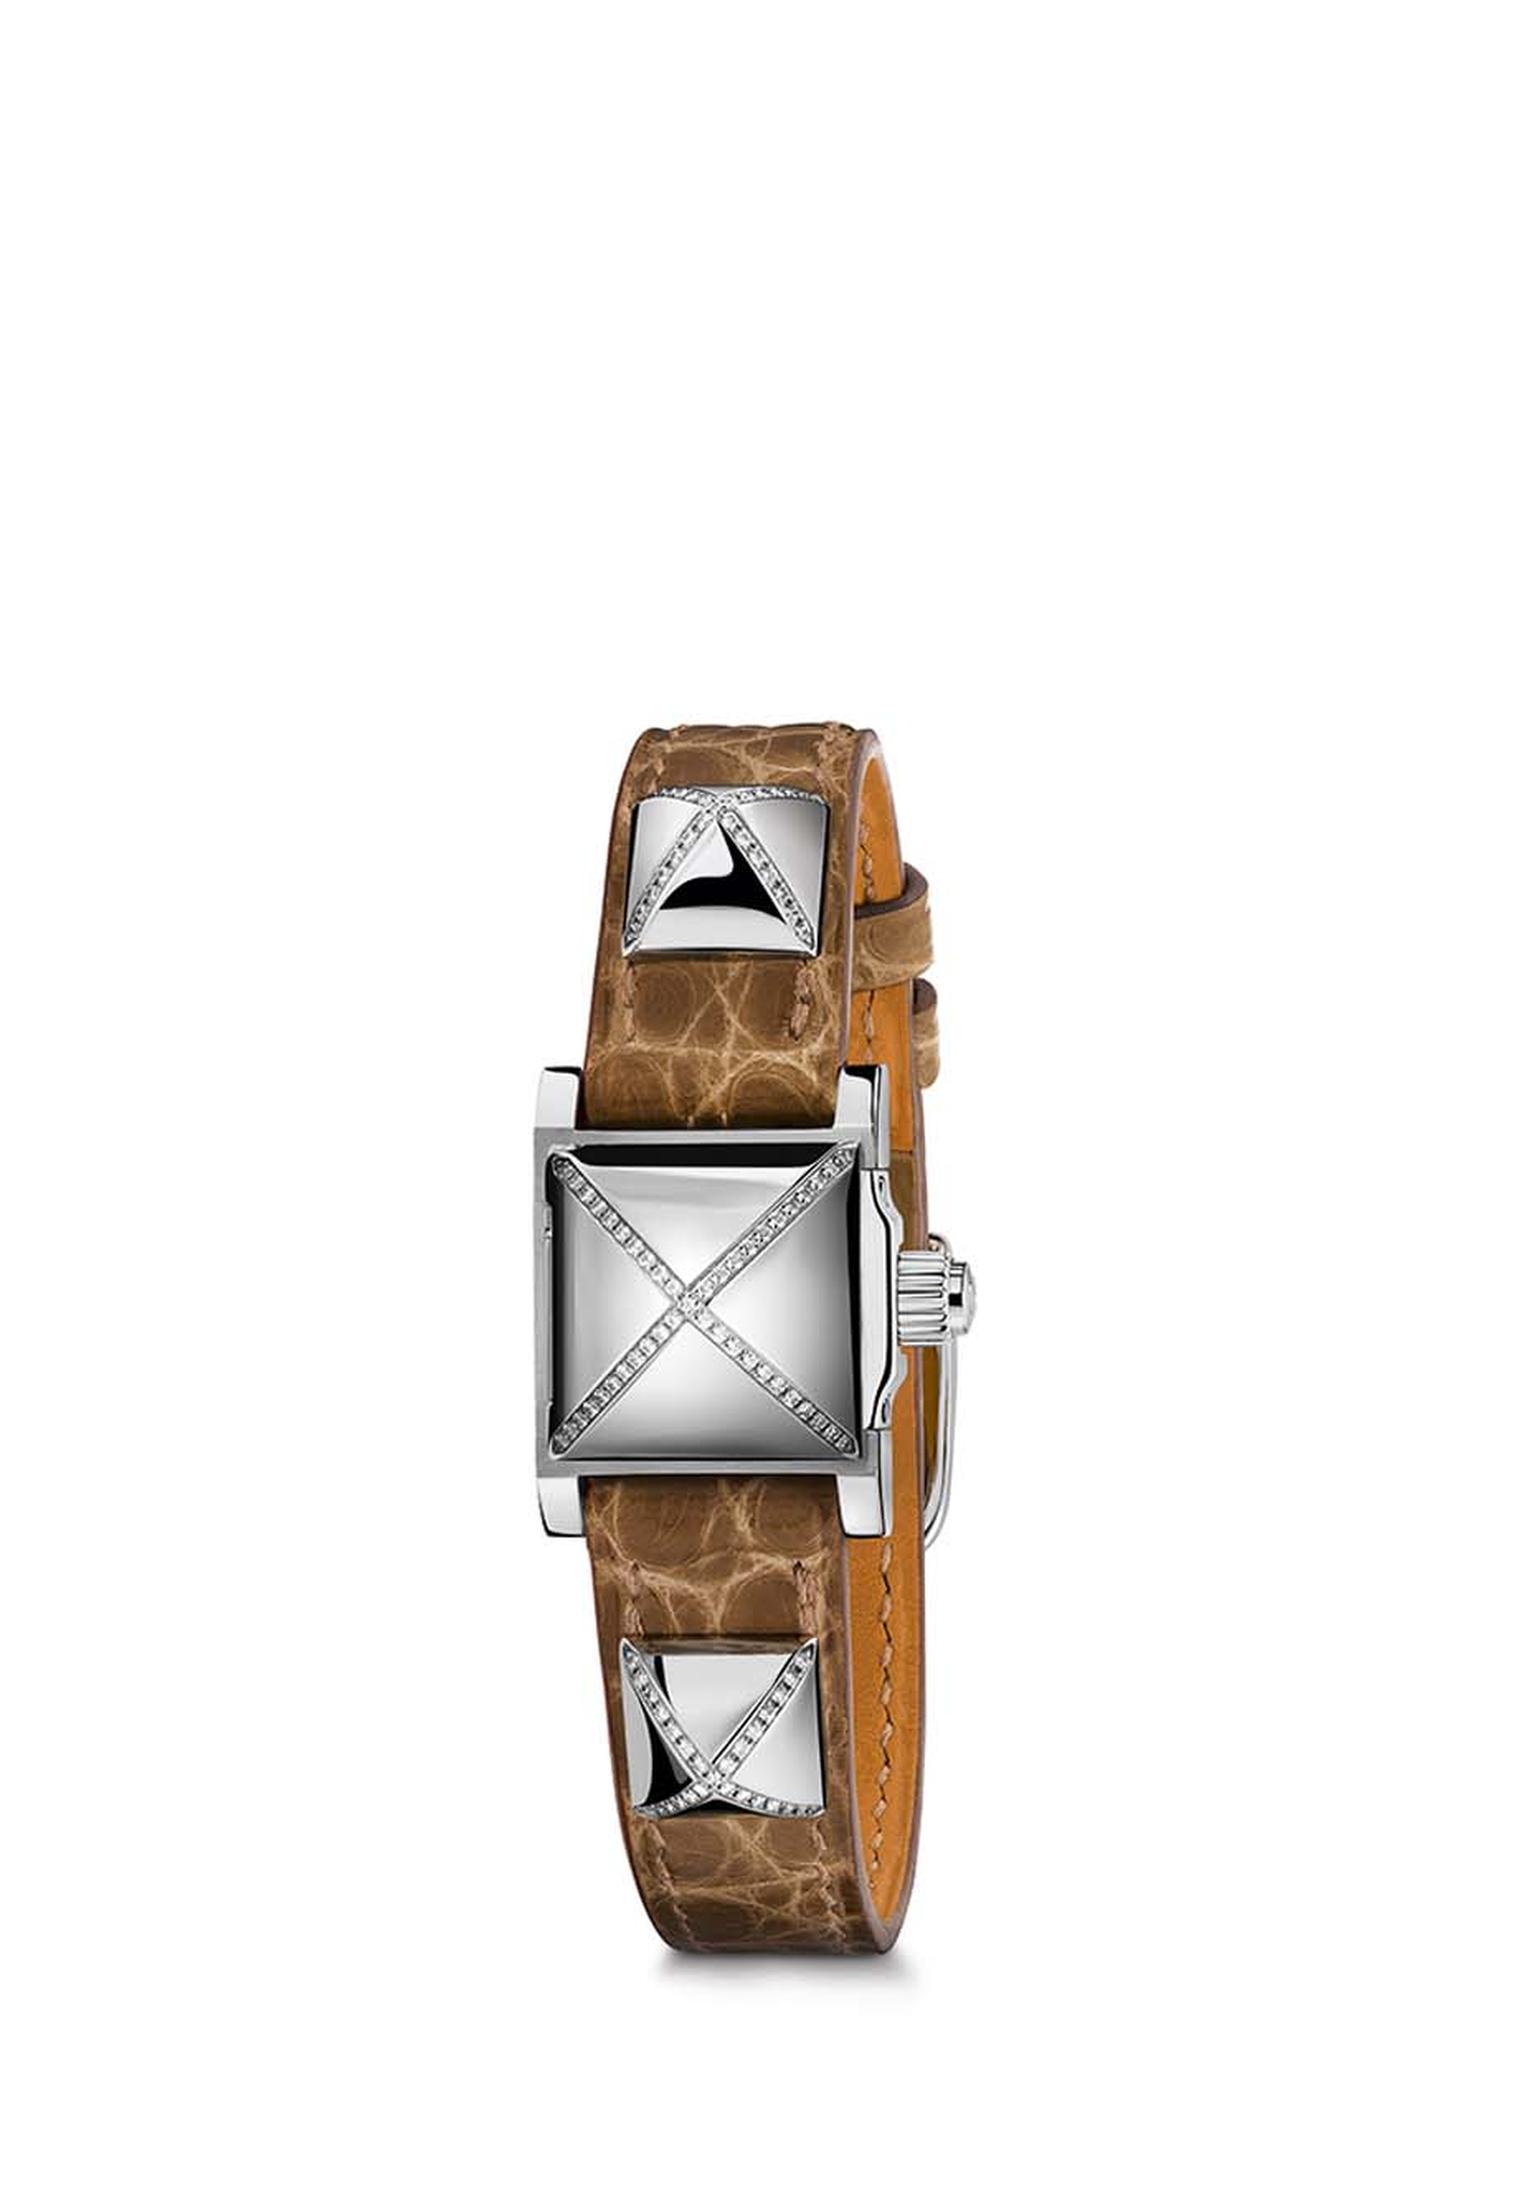 Hermès Médor watch with three pyramids featuring a cross of pavé diamonds on an alligator strap.